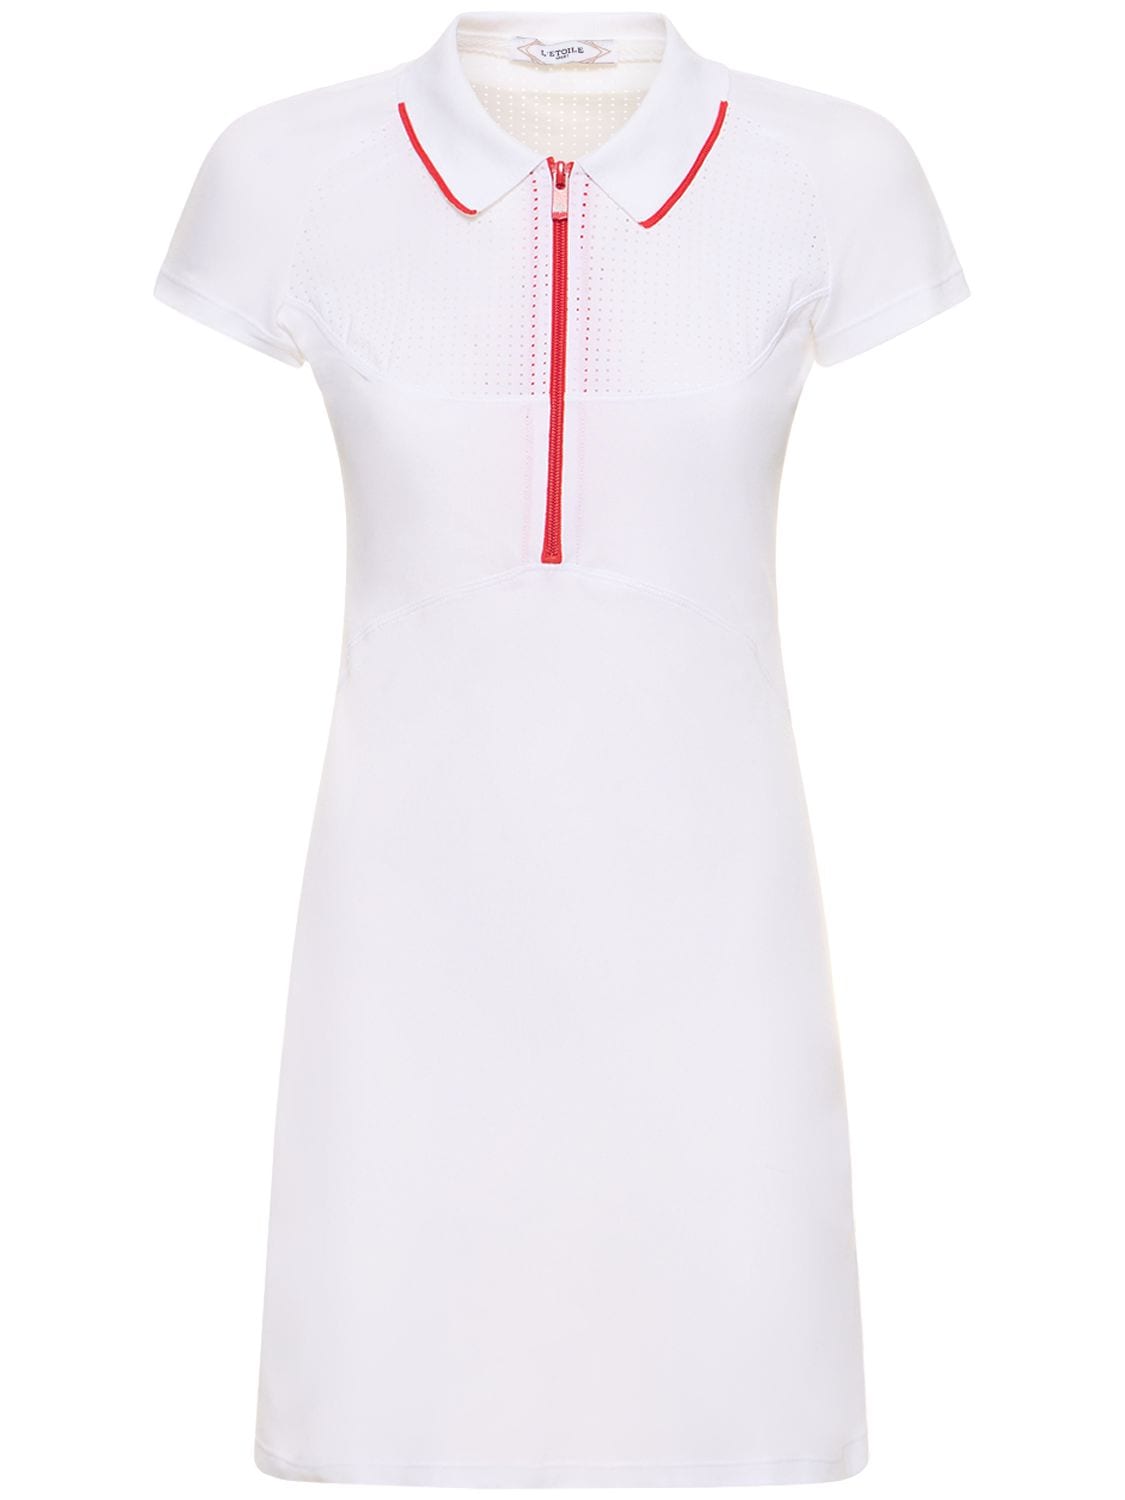 L'etoile Sport Mesh Zip Performance Dress In White